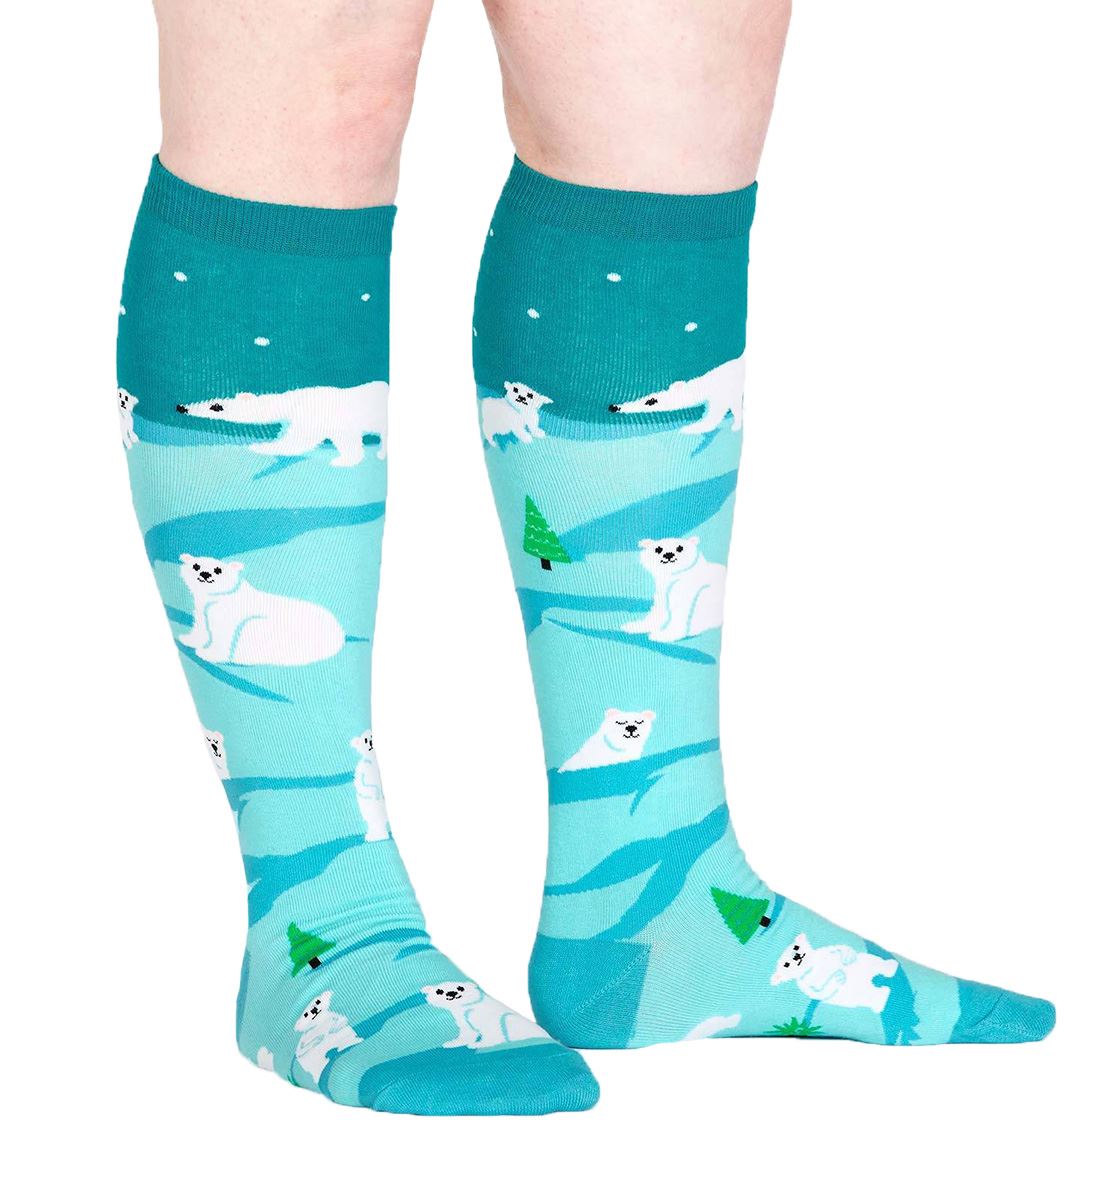 SOCK it to me Unisex Knee High Socks (f0451),Polar Bear Stare - Polar Bear Stare,One Size